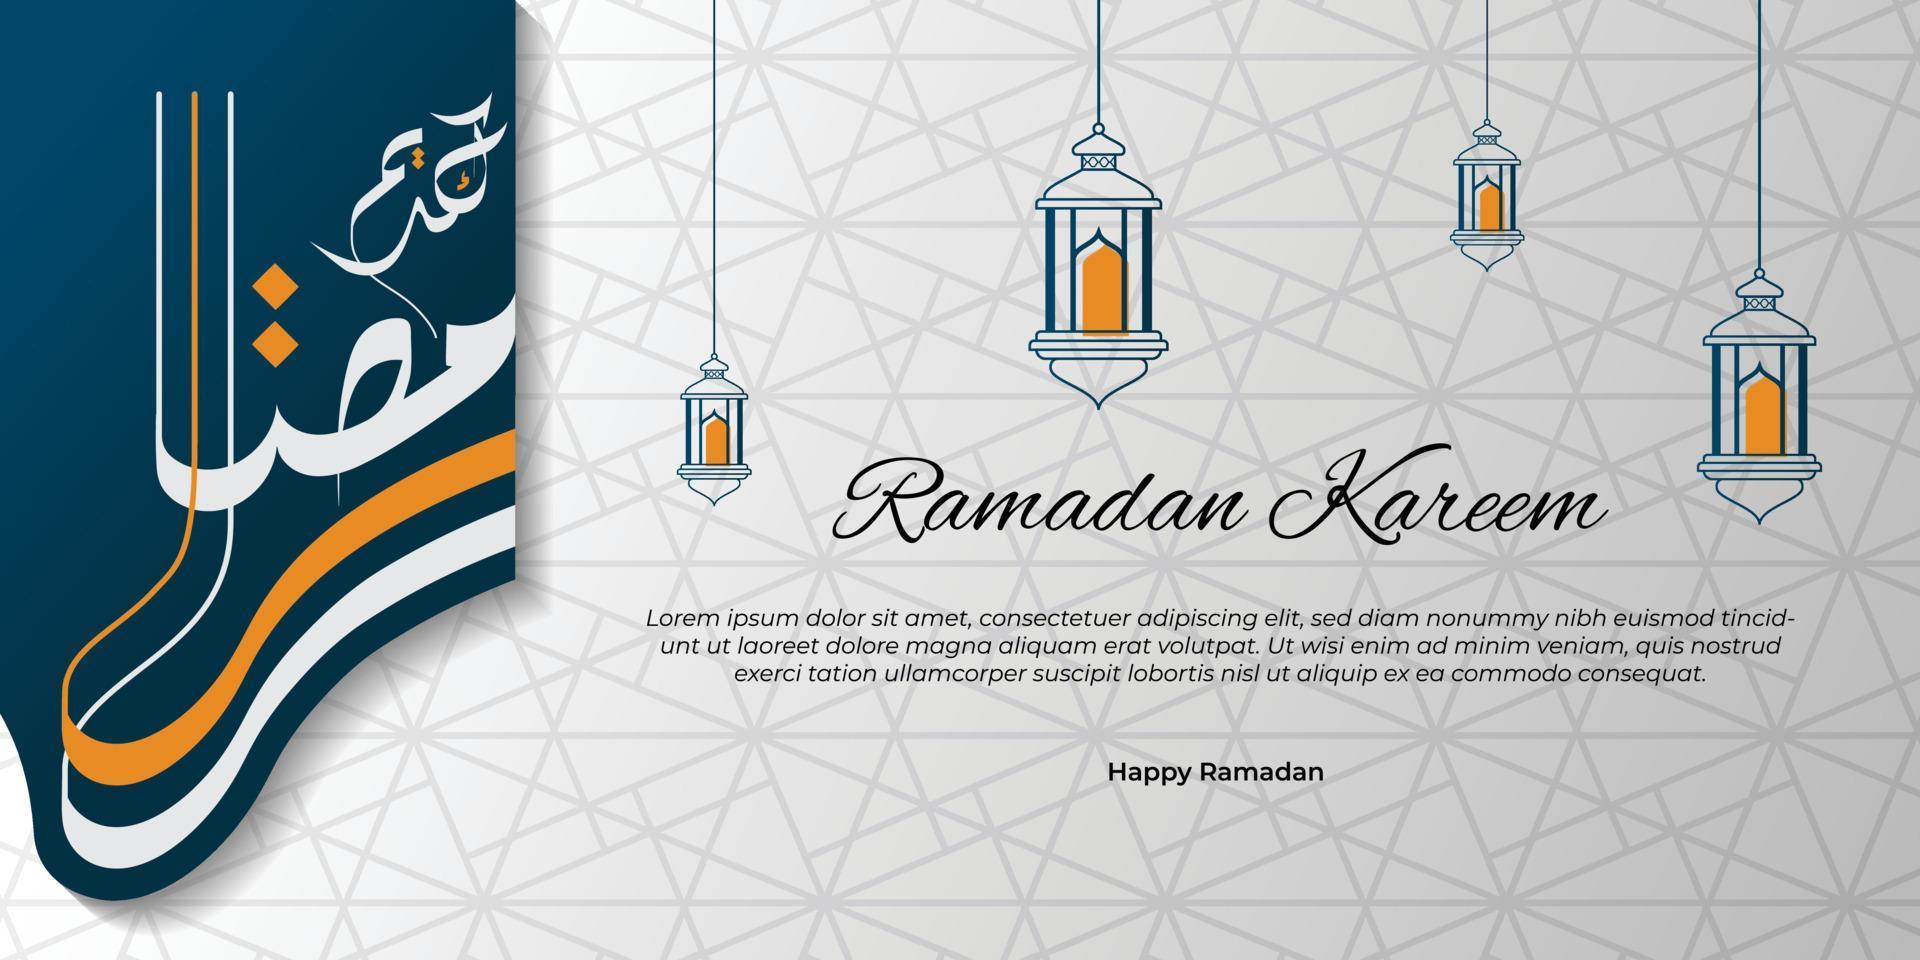 fond de ramadan kareem avec un design de lanterne plate. le texte arabe signifie ramadan kareem. vecteur